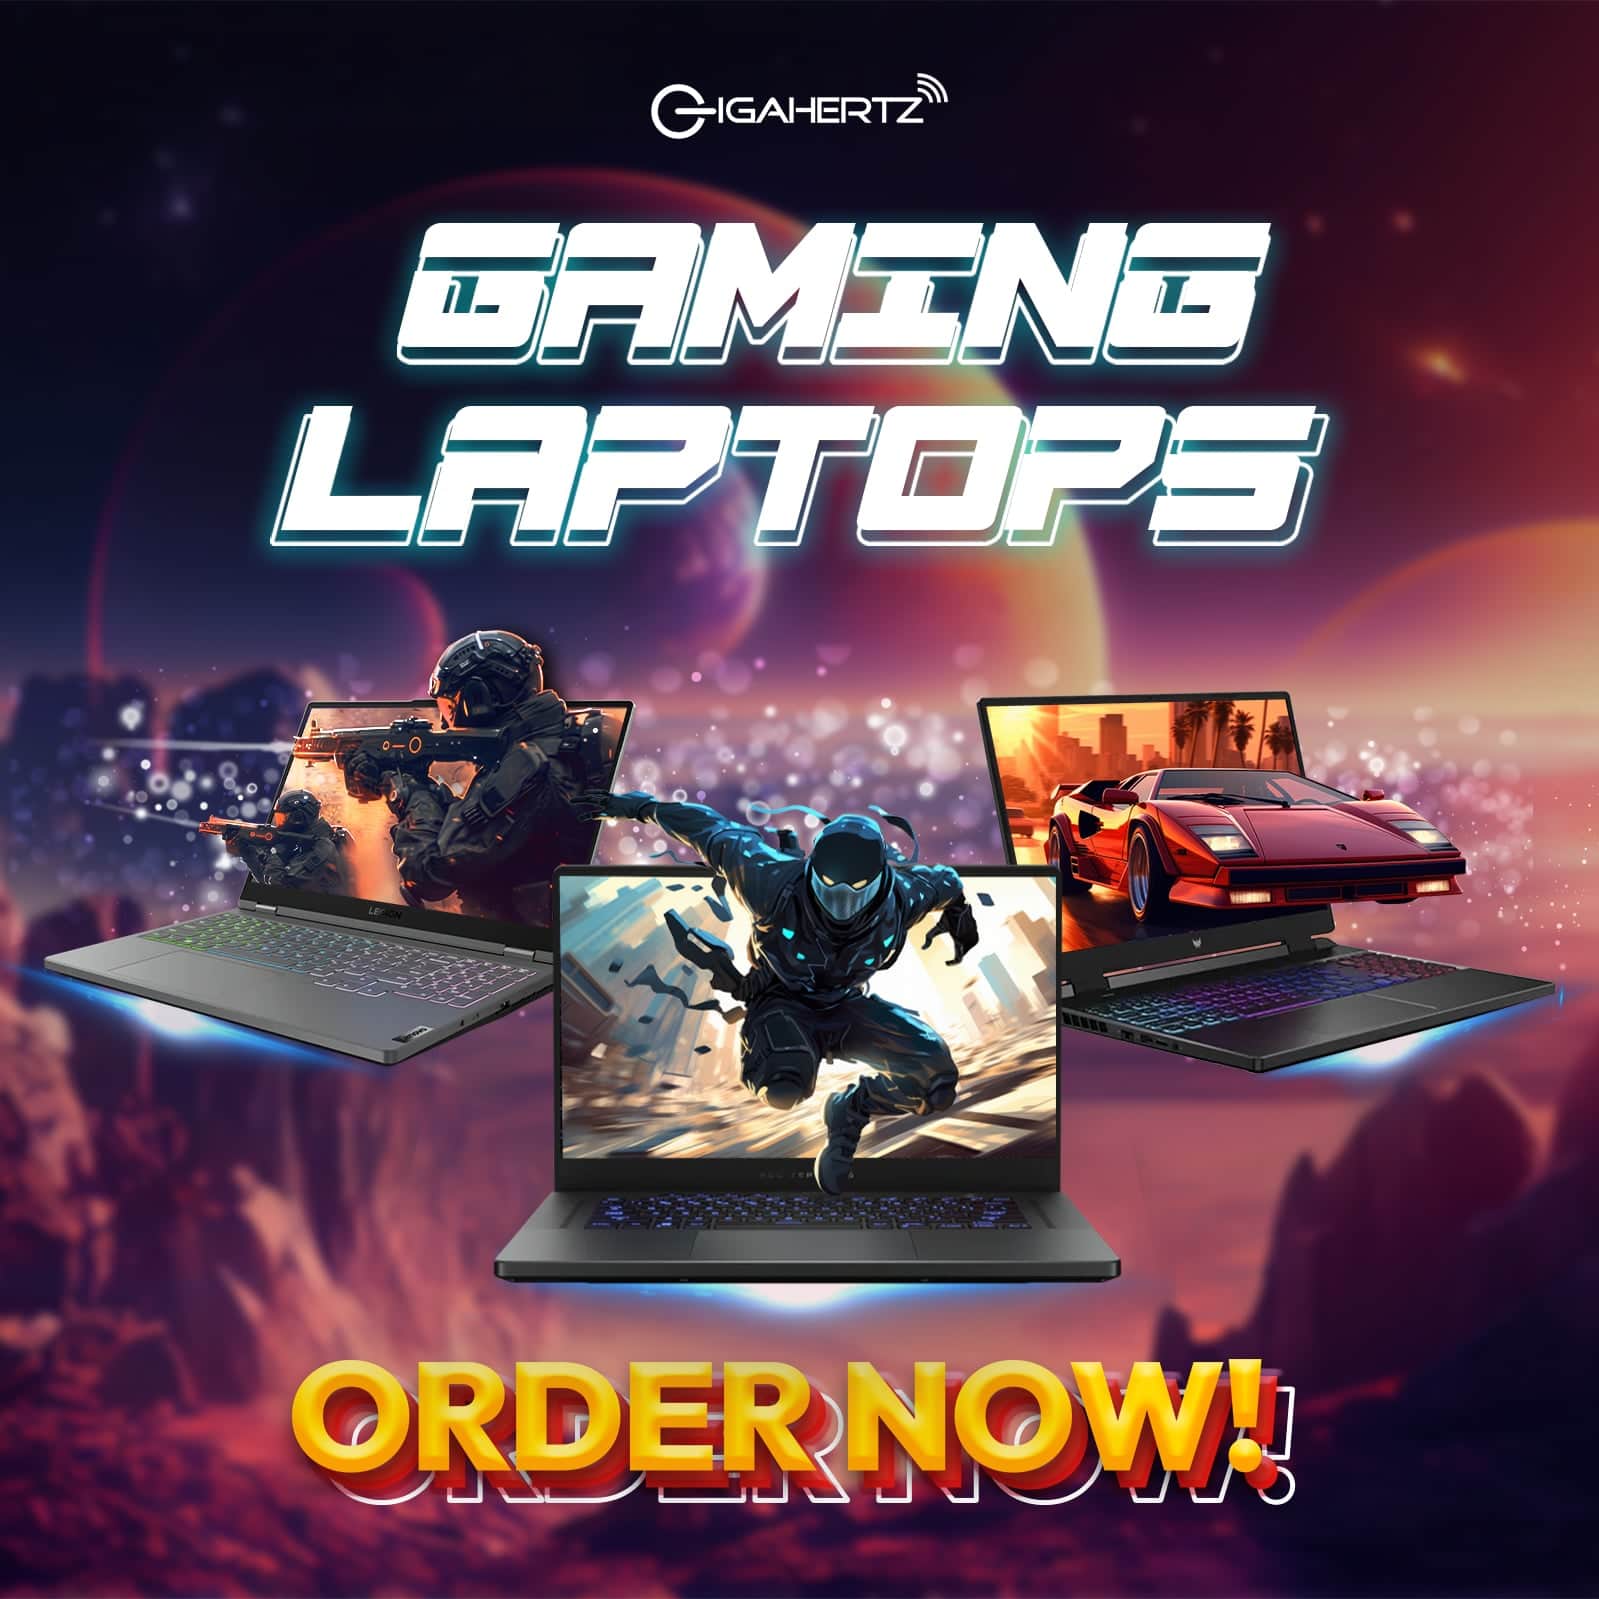 gigahertz | best gaming laptops, affordable gaming laptops, top gaming laptops, latest gaming laptops, gaming laptops online